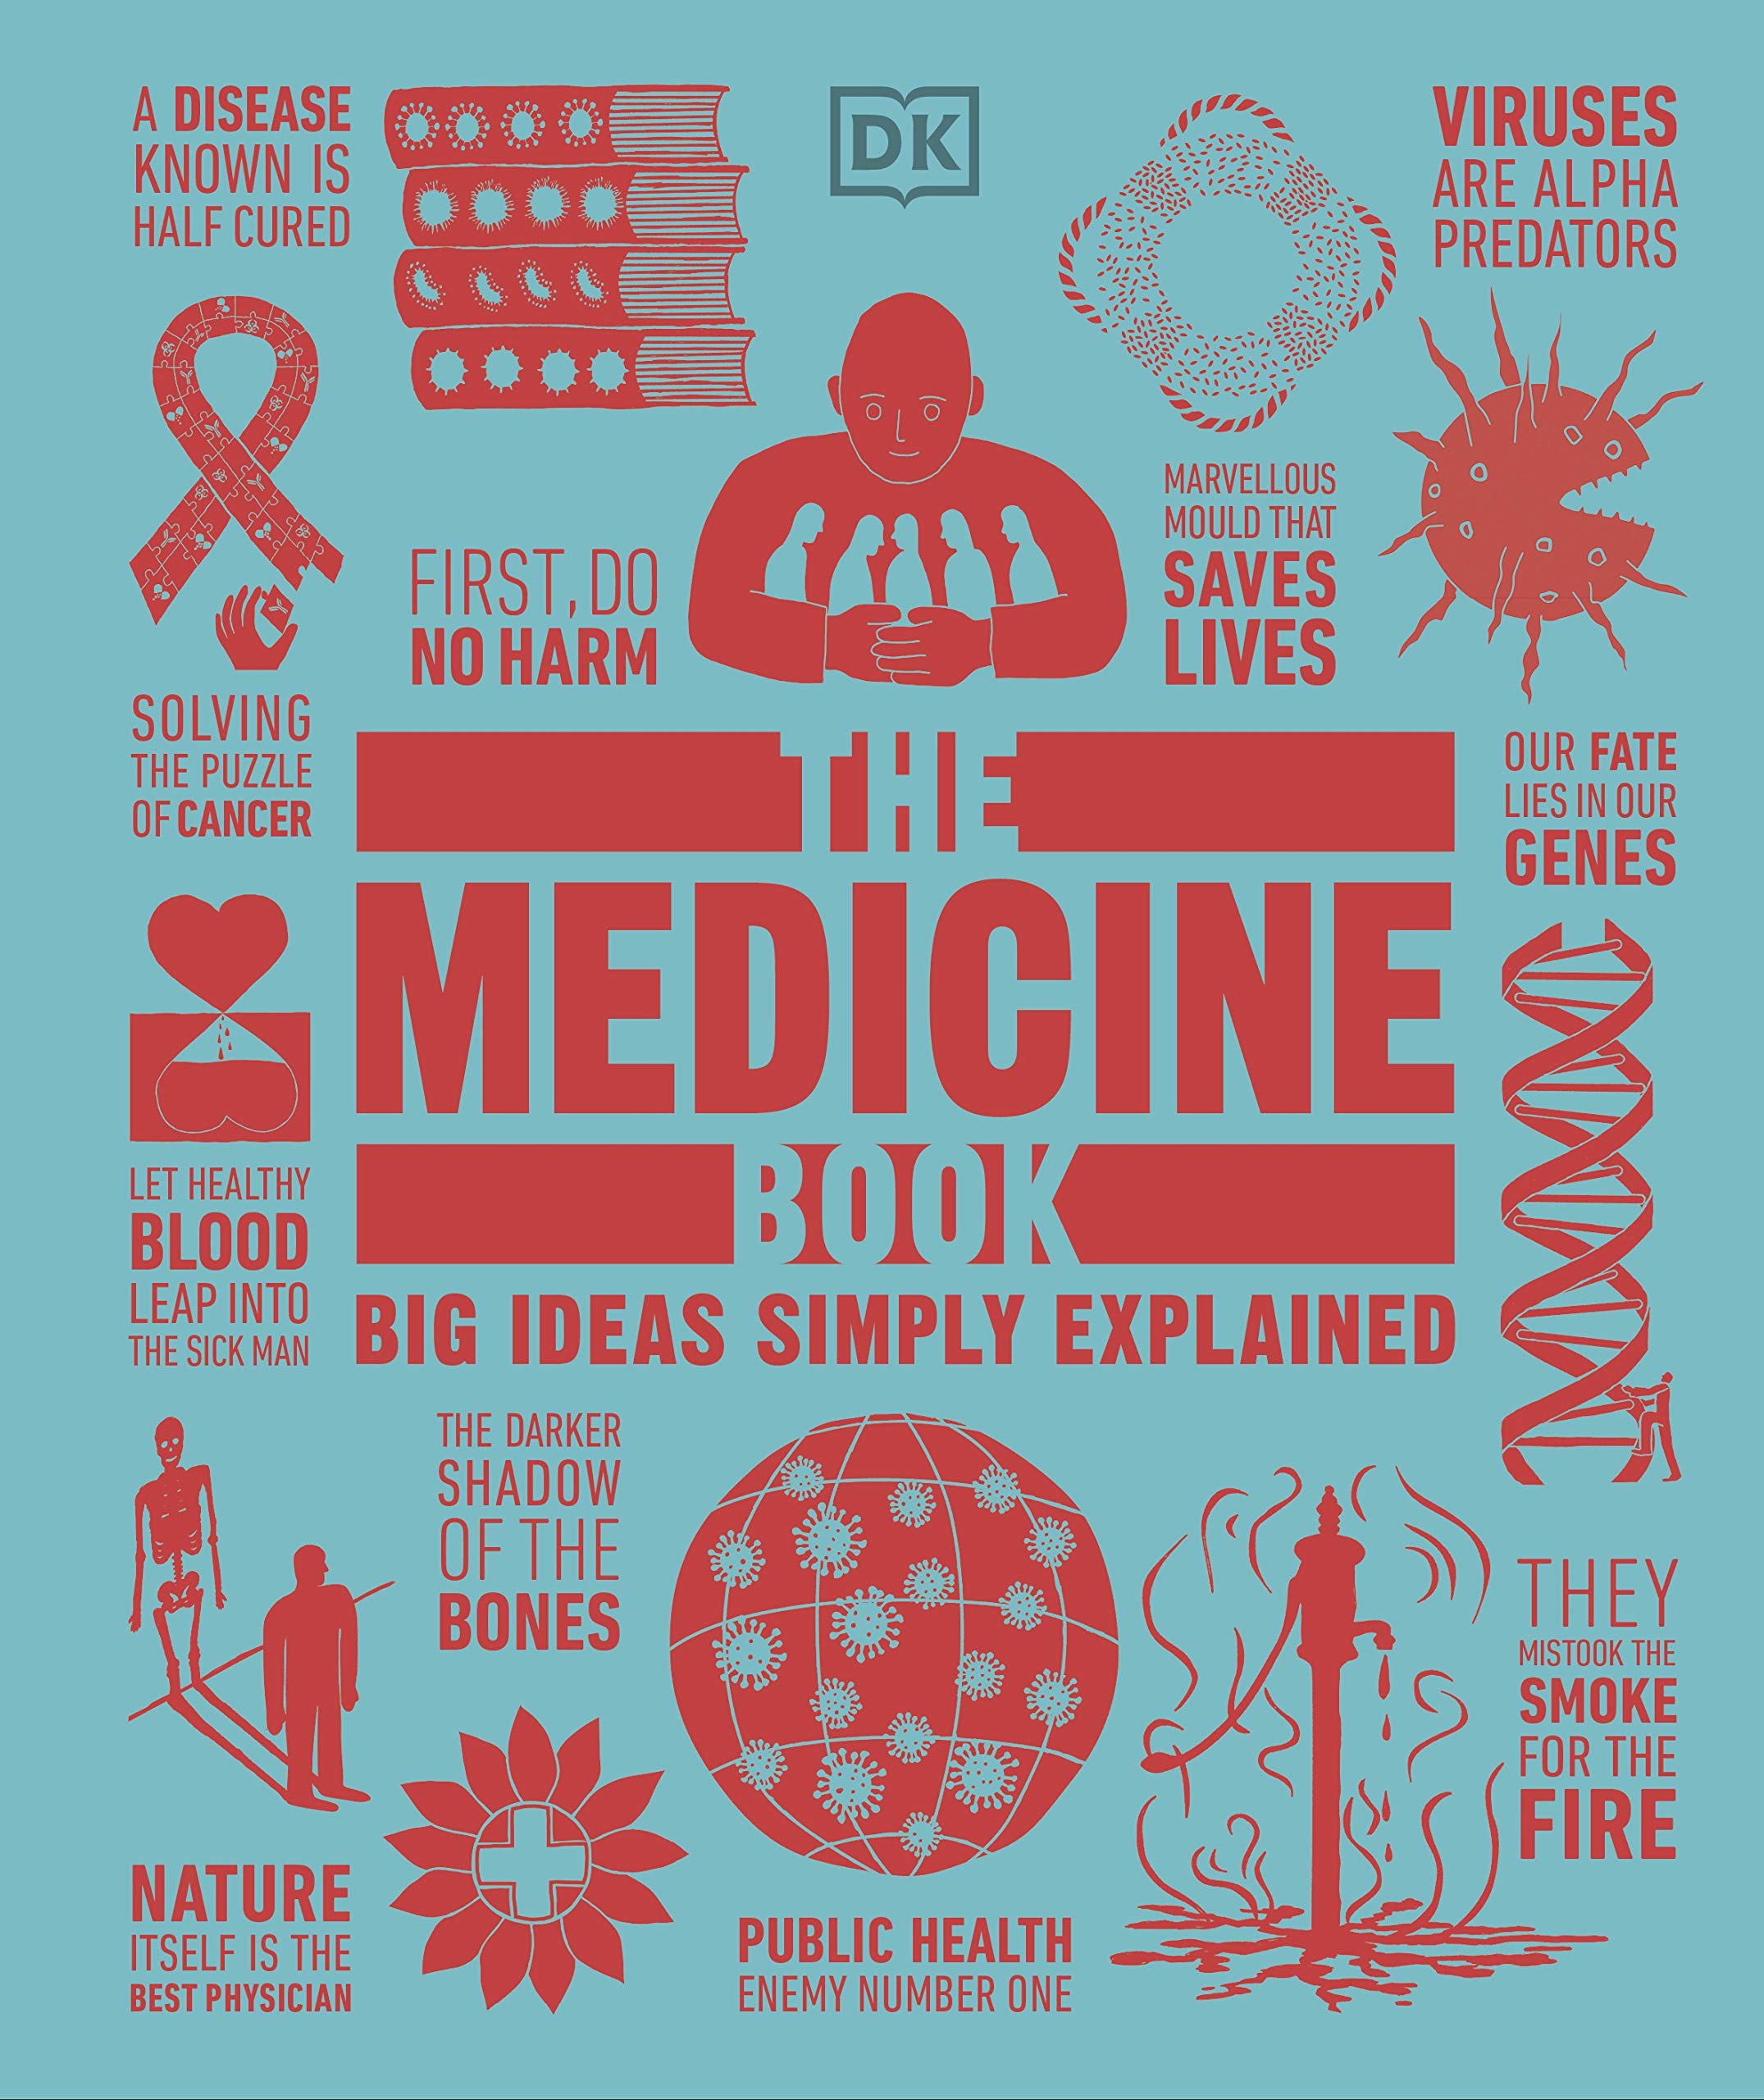 DK Medicine Book : Big Ideas Simply Explained